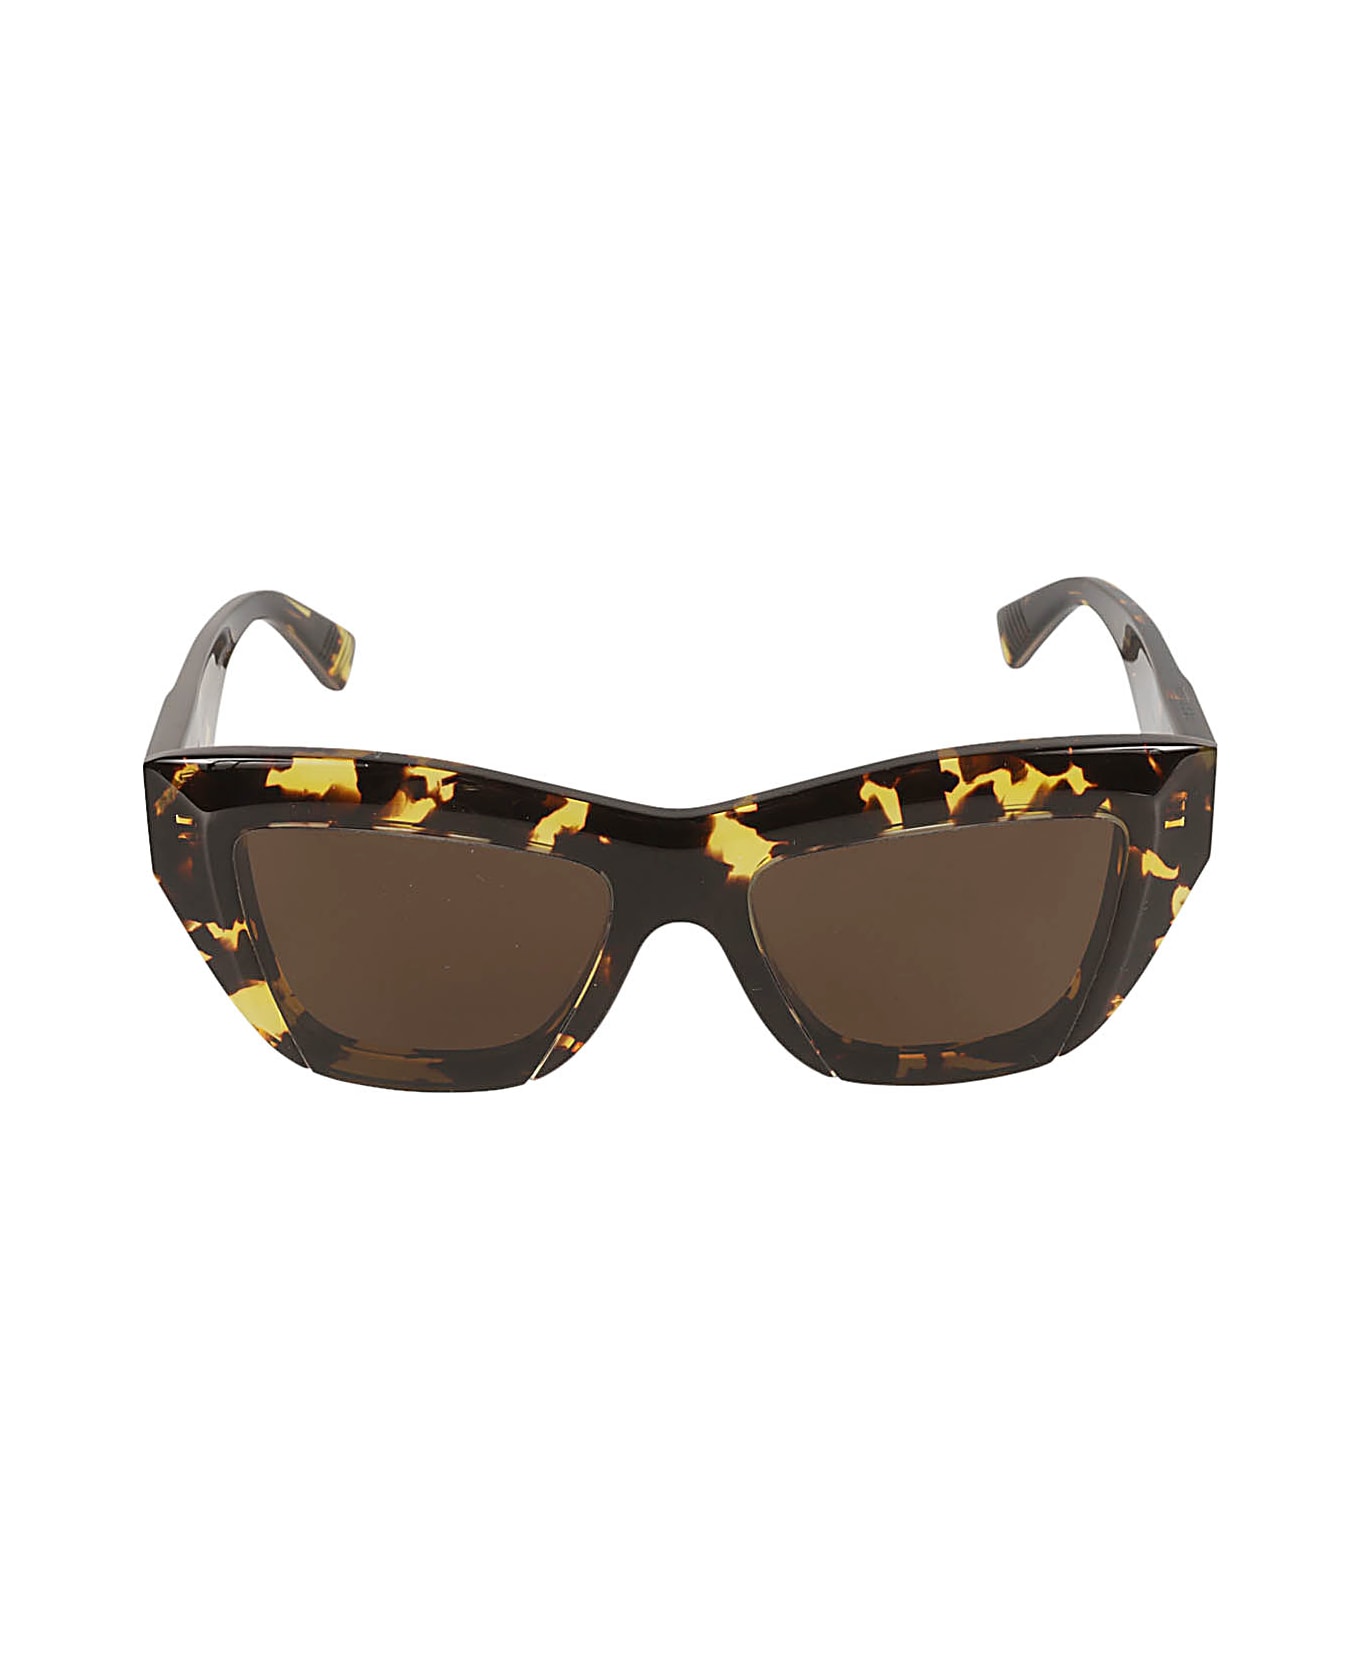 Bottega Veneta Eyewear Square Frame Flame Effect Sunglasses - Havana/Brown